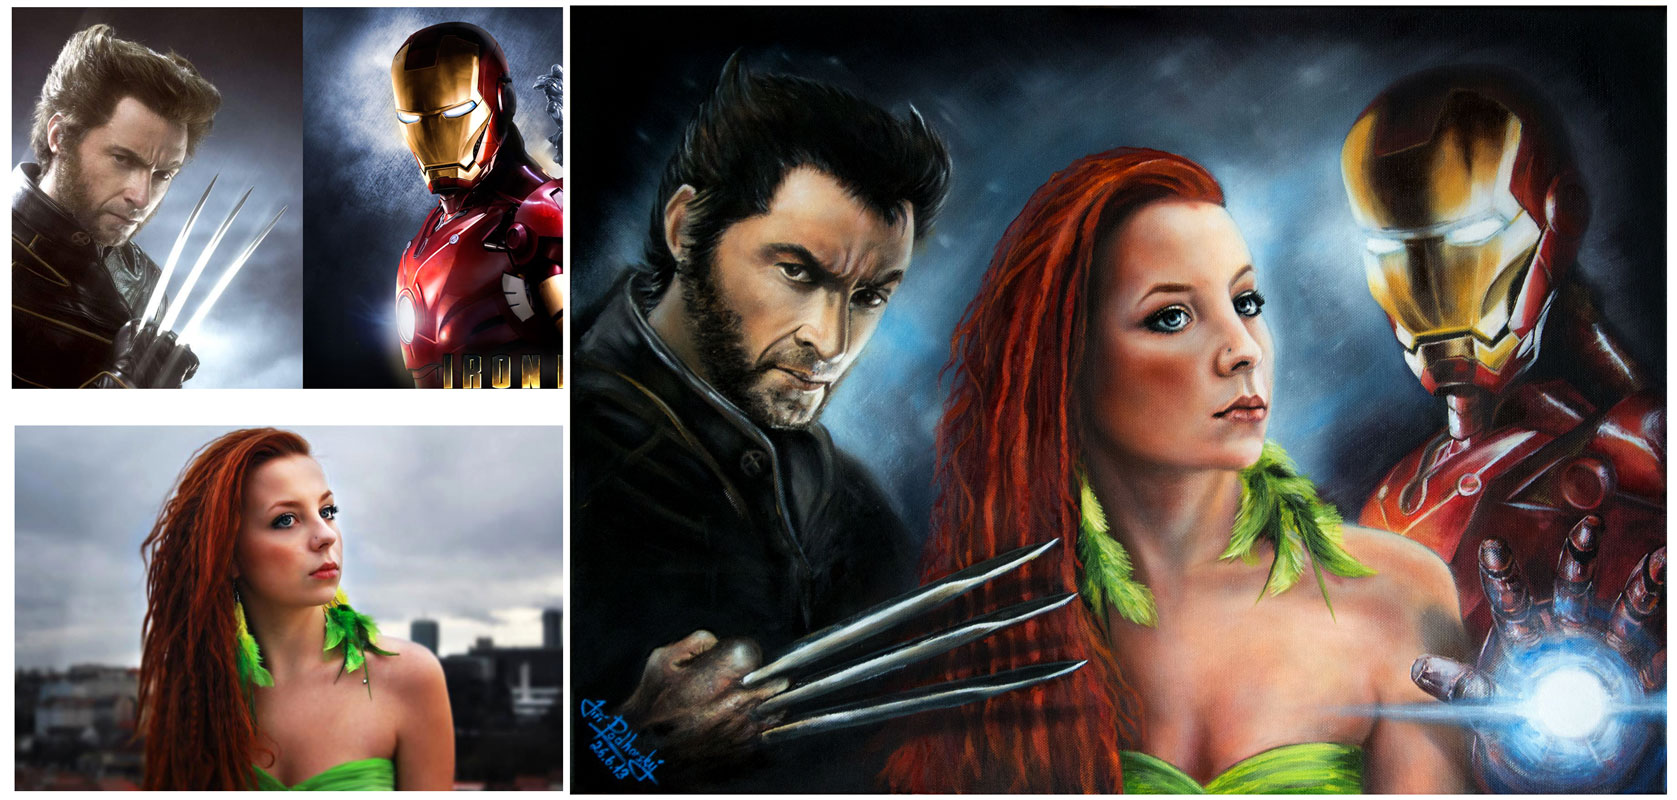 Nicka-Wolverine-Iron man